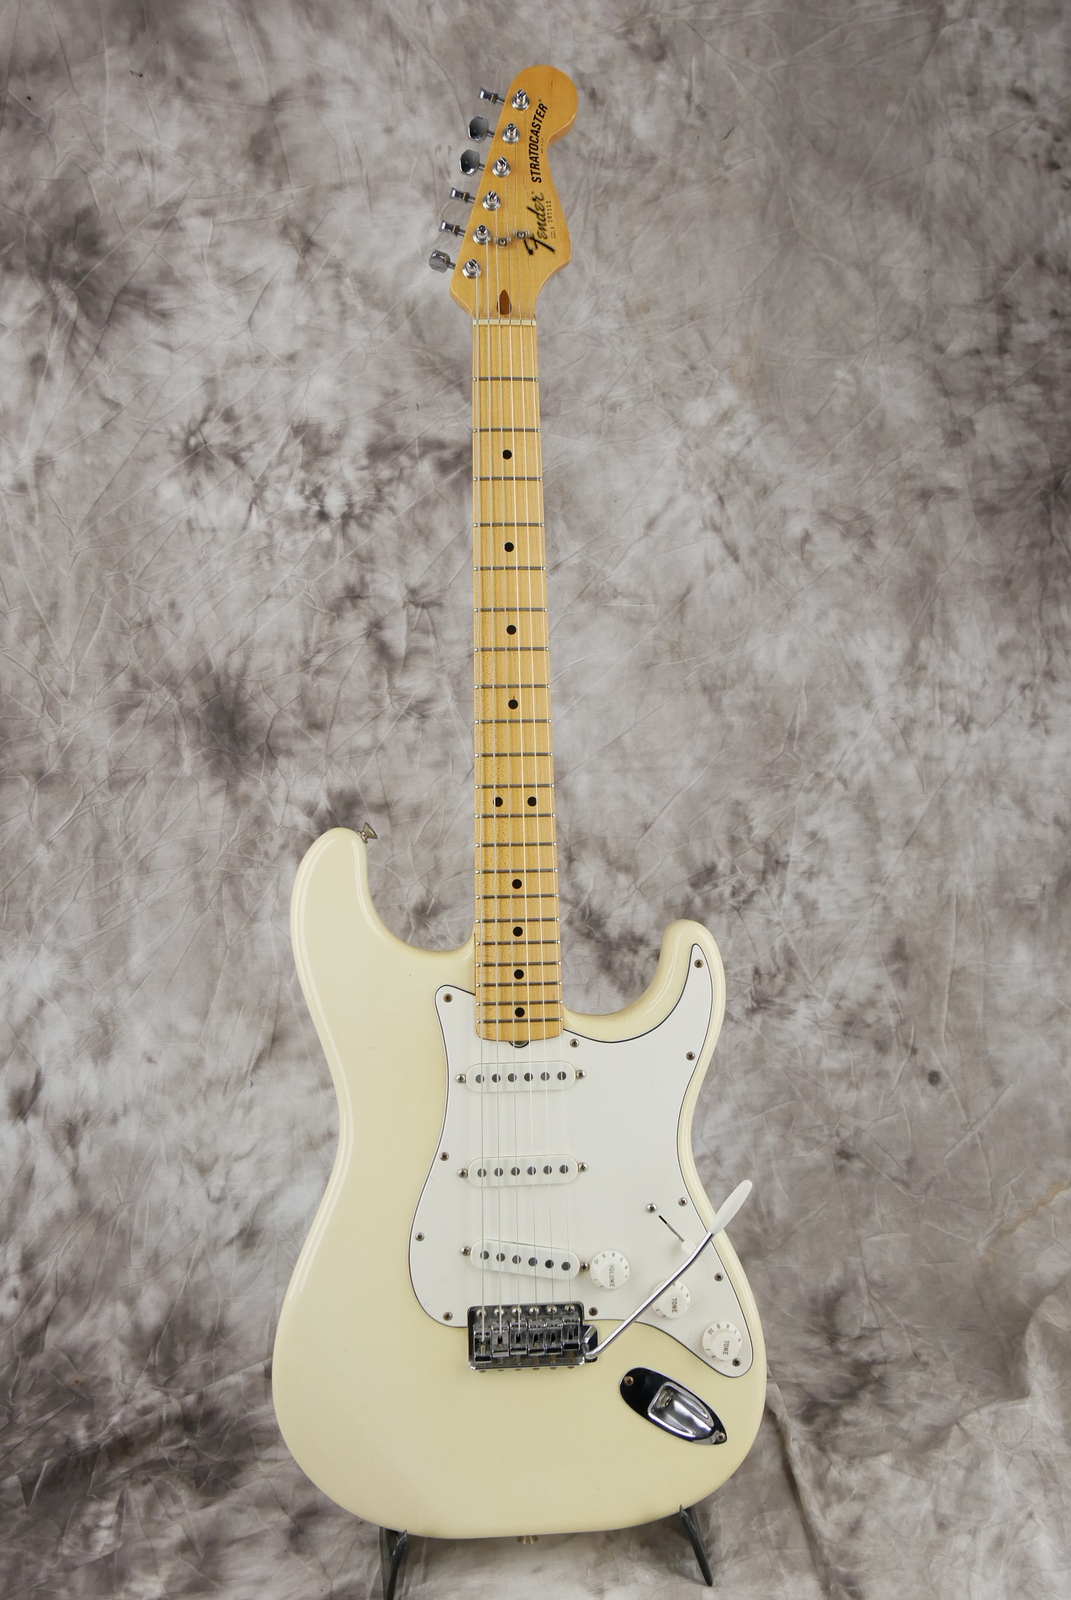 img/vintage/5303/Fender_Stratocaster_Dan_smith_1982_tremolo_hardcase-001.JPG